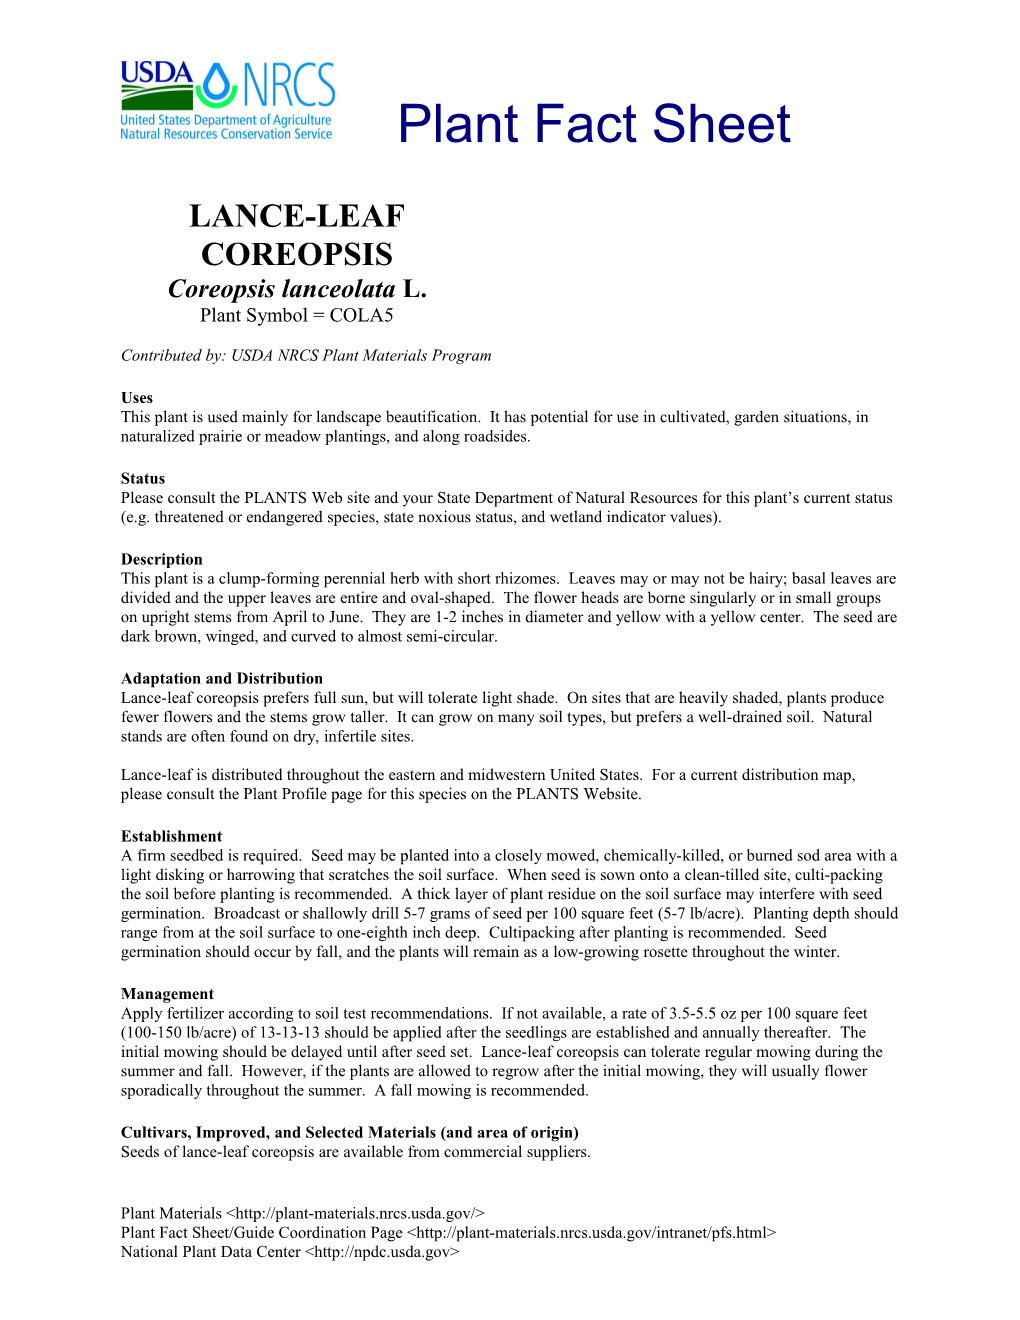 Lance-Leaf Coreopsis